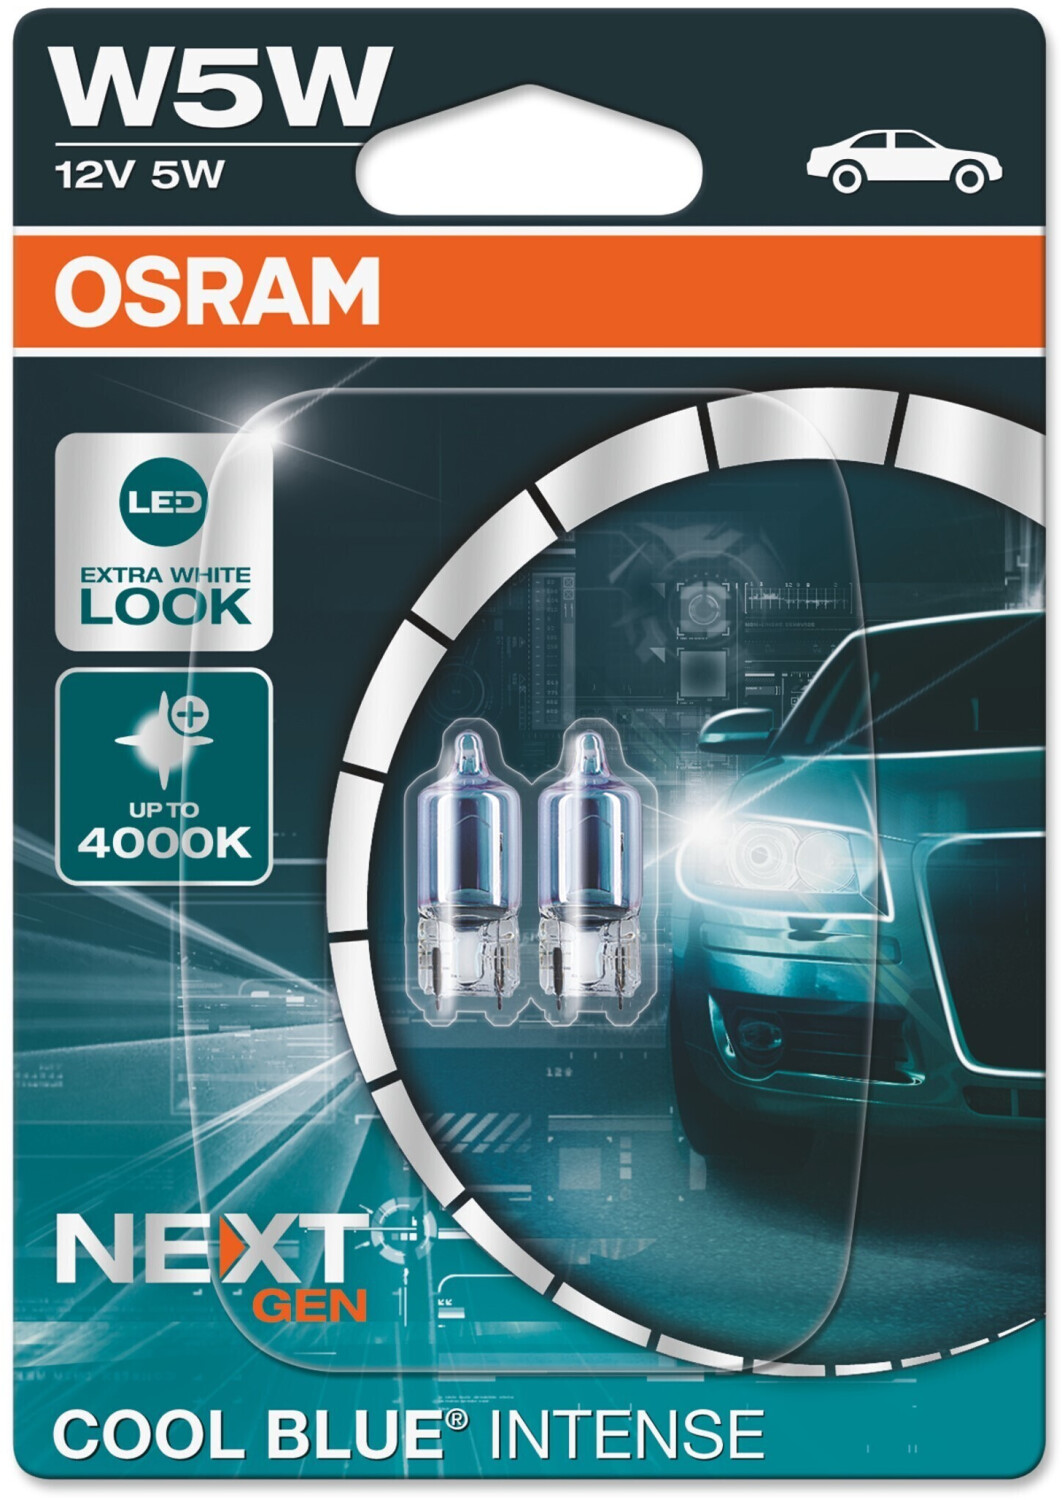 Buy Osram Cool Blue Intense NextGeneration W5W (2825CBN-02B) from £5.99  (Today) – Best Deals on